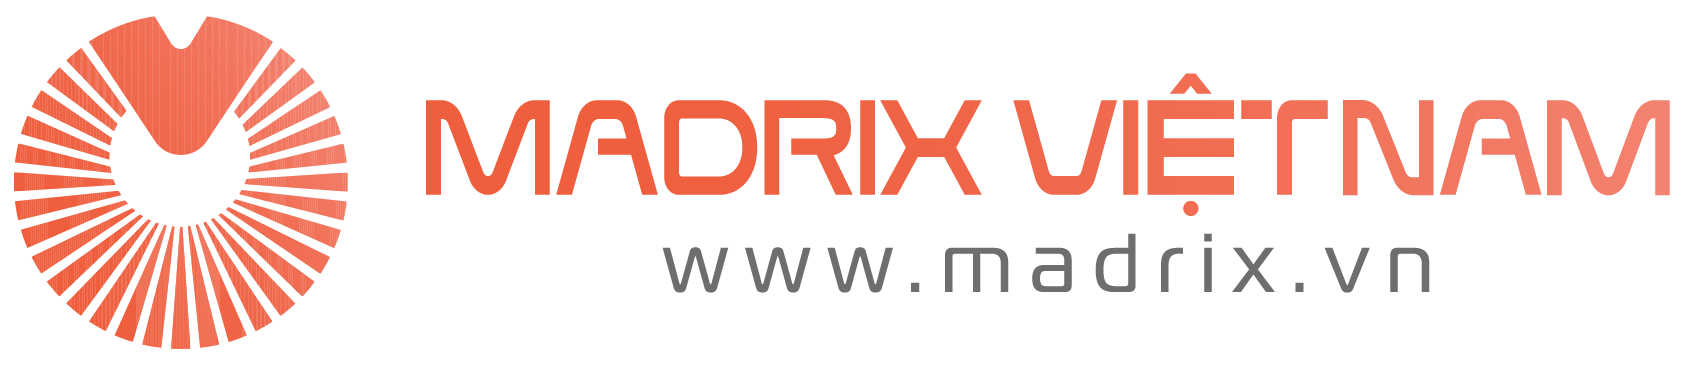 Madrix Việt Nam – www.madrix.vn